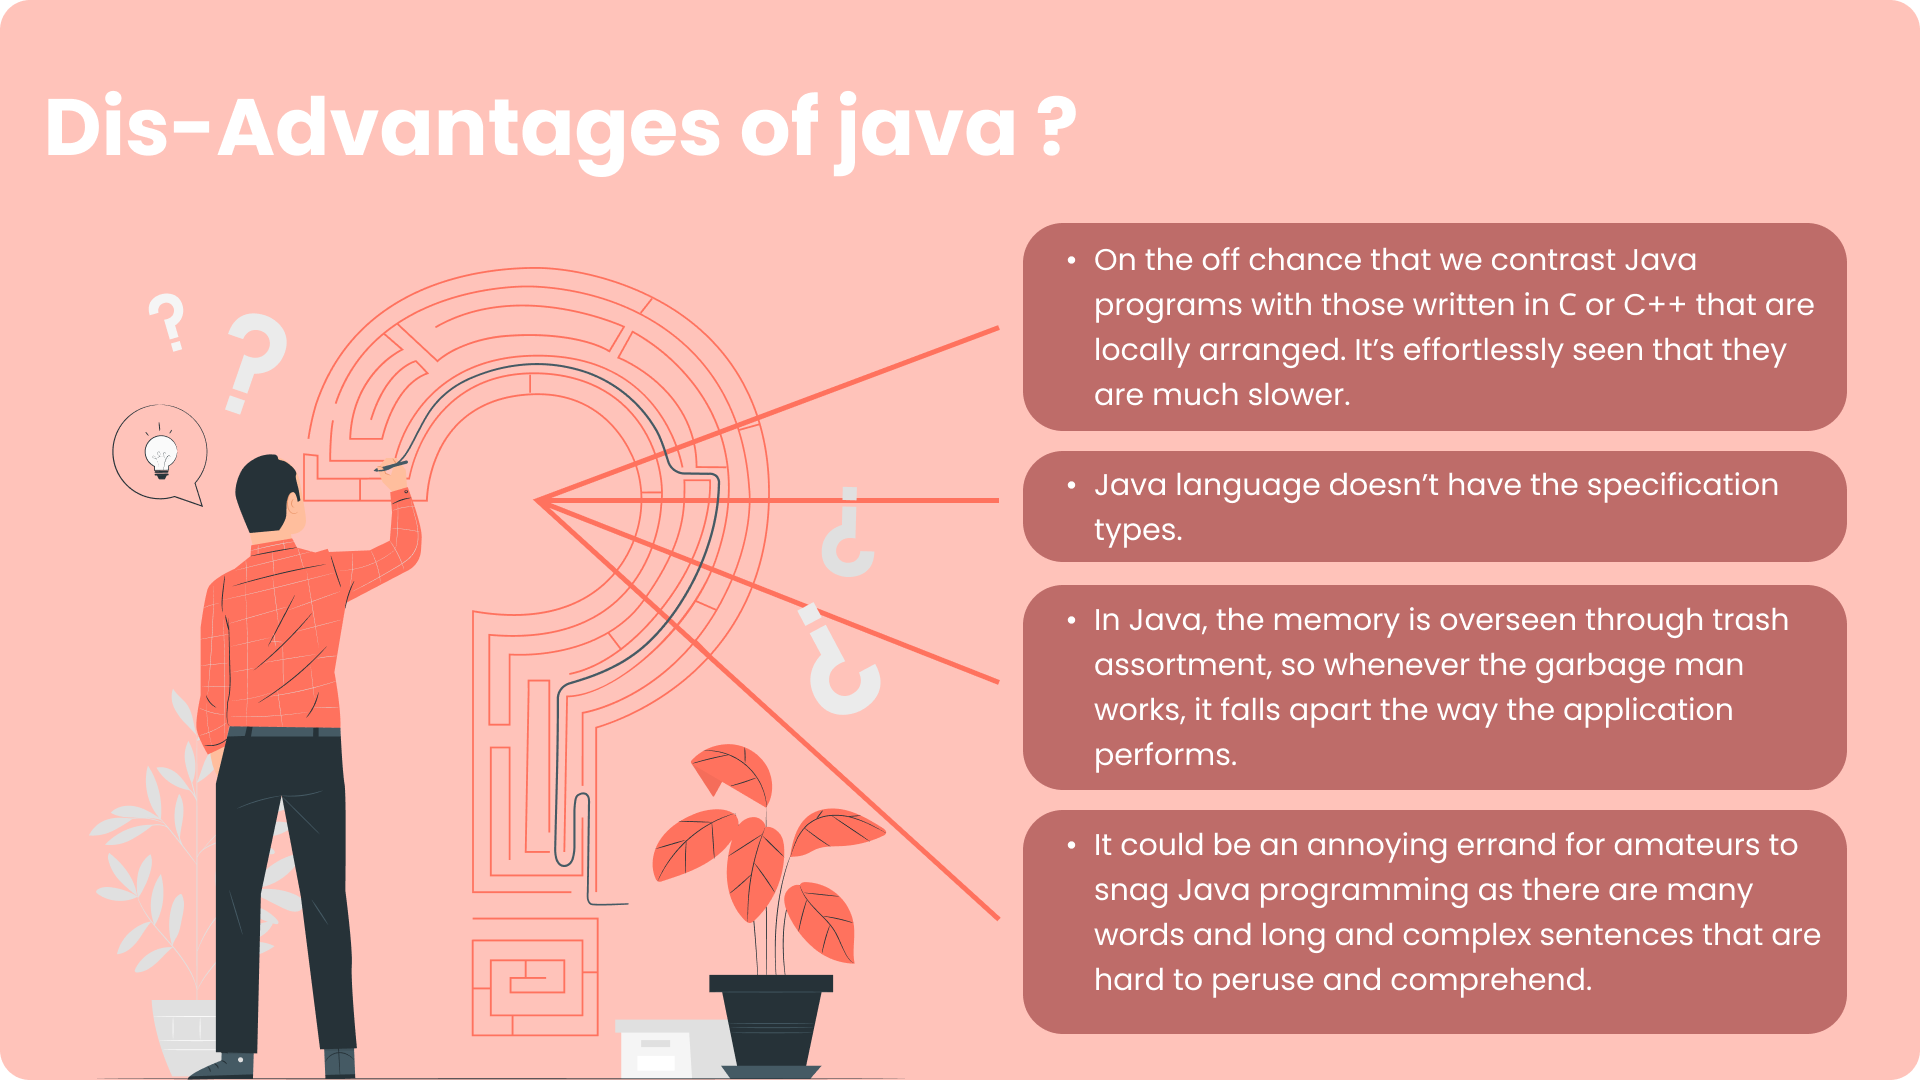 Disadvantages of using Java